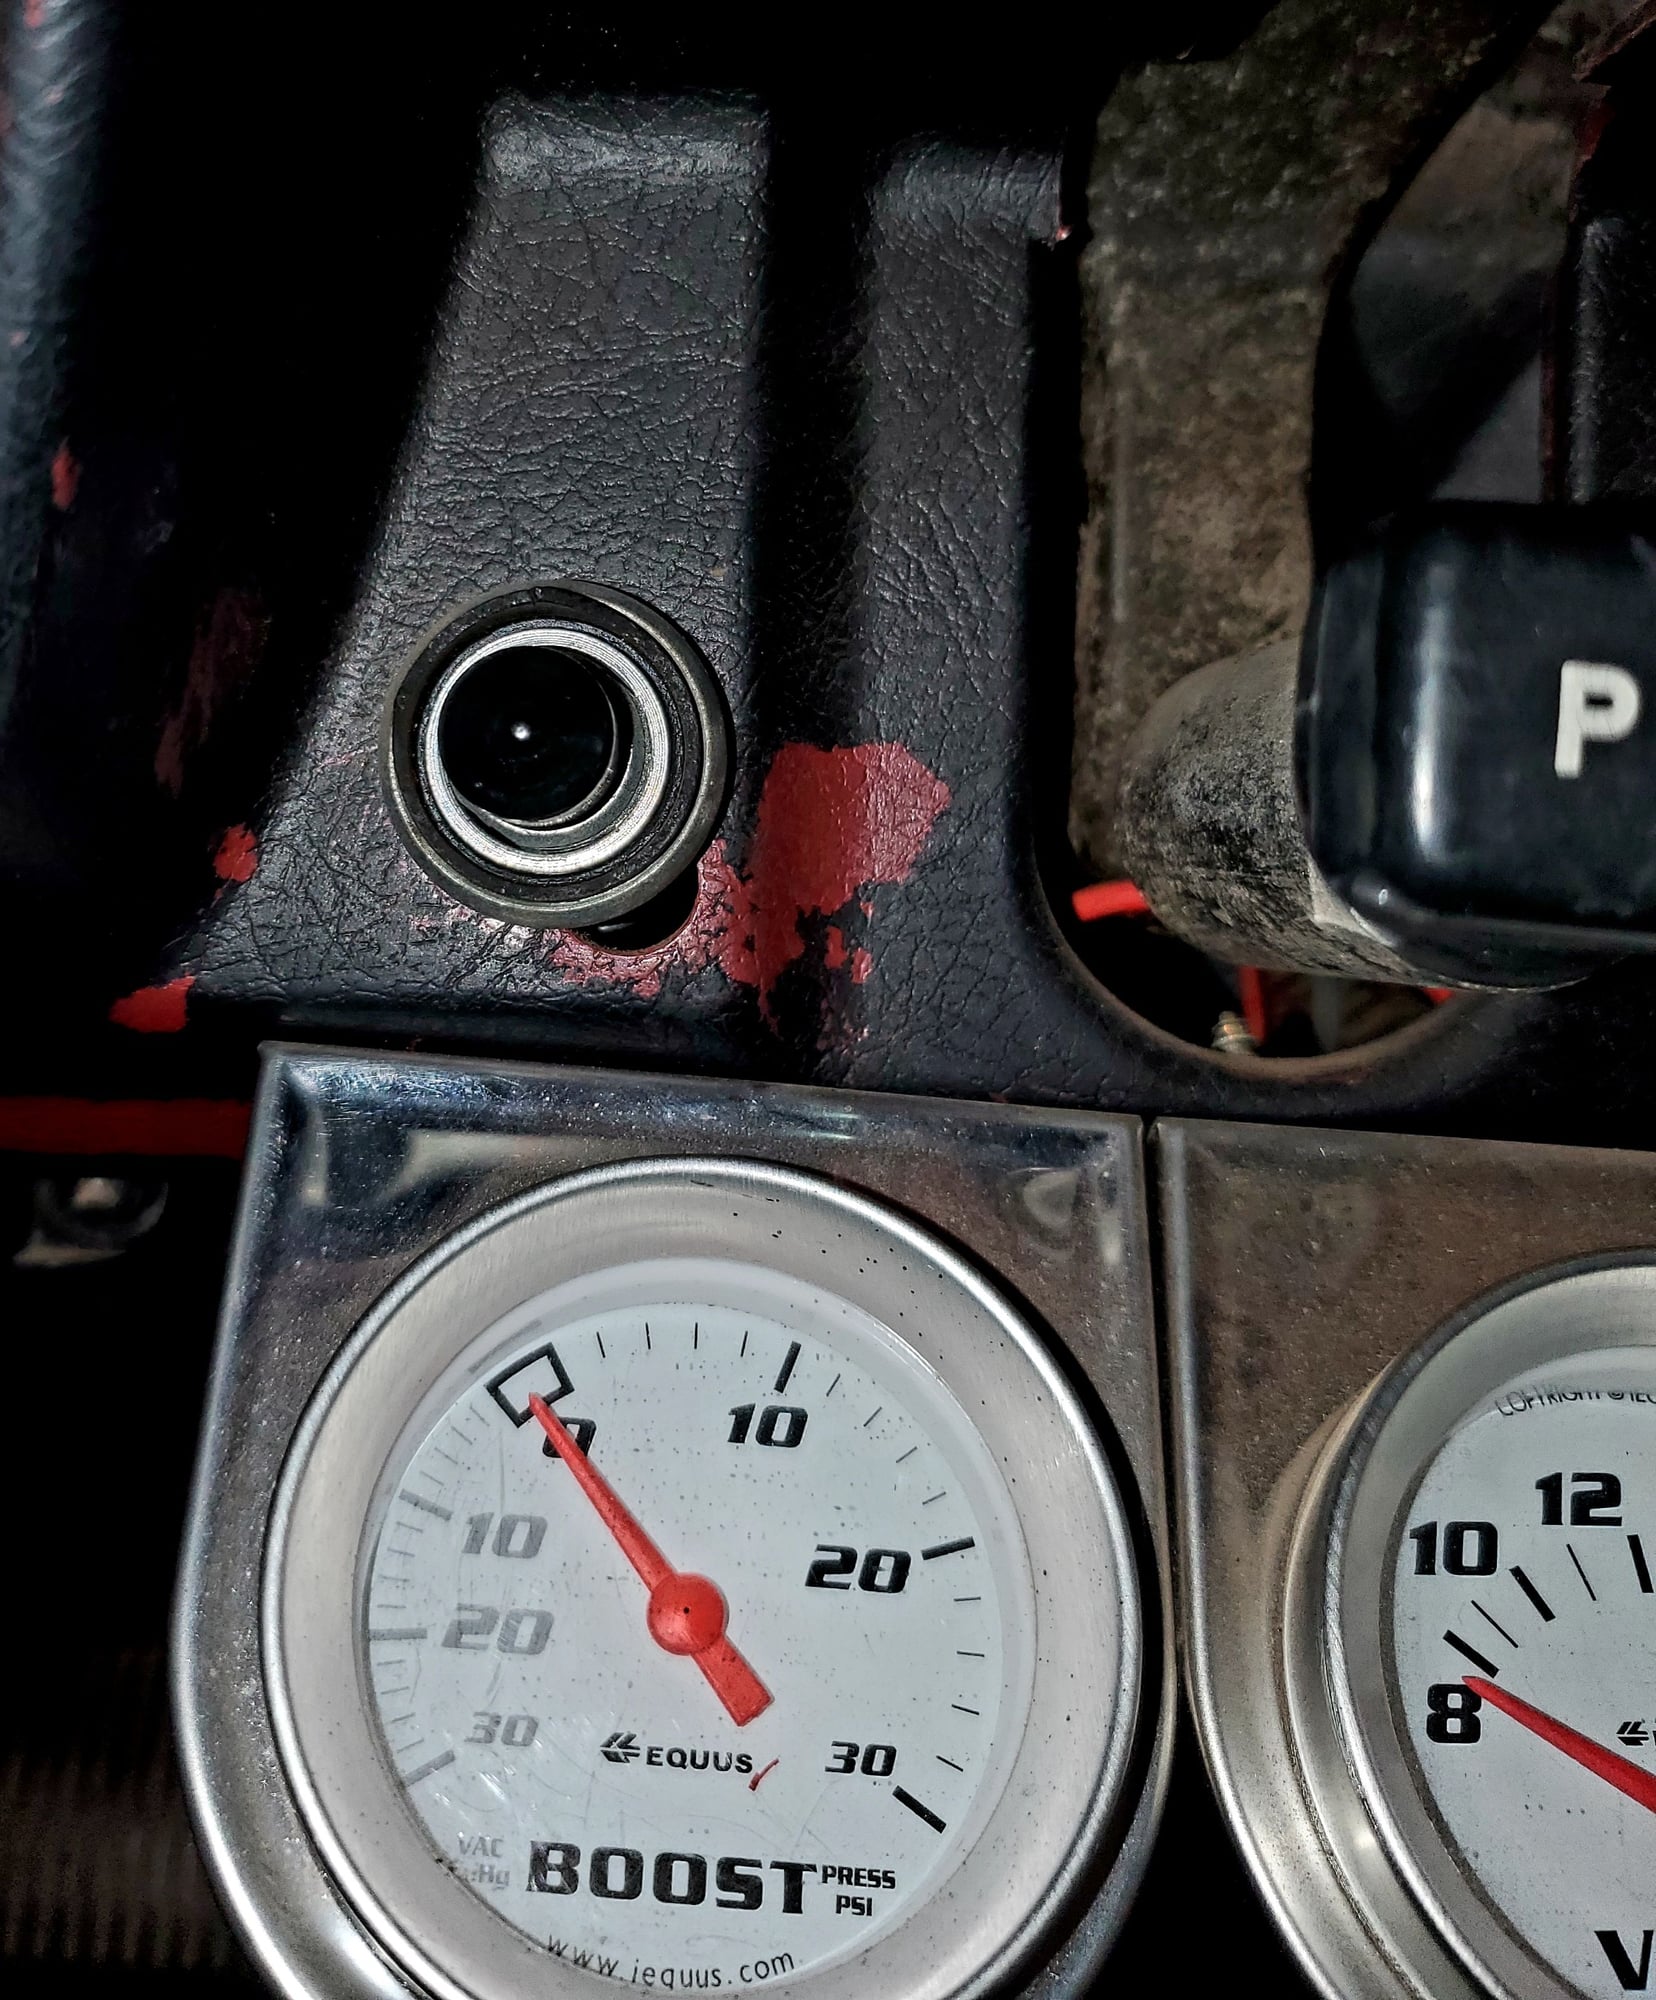 FJ60 oil pressure gauge fried - how to fix?